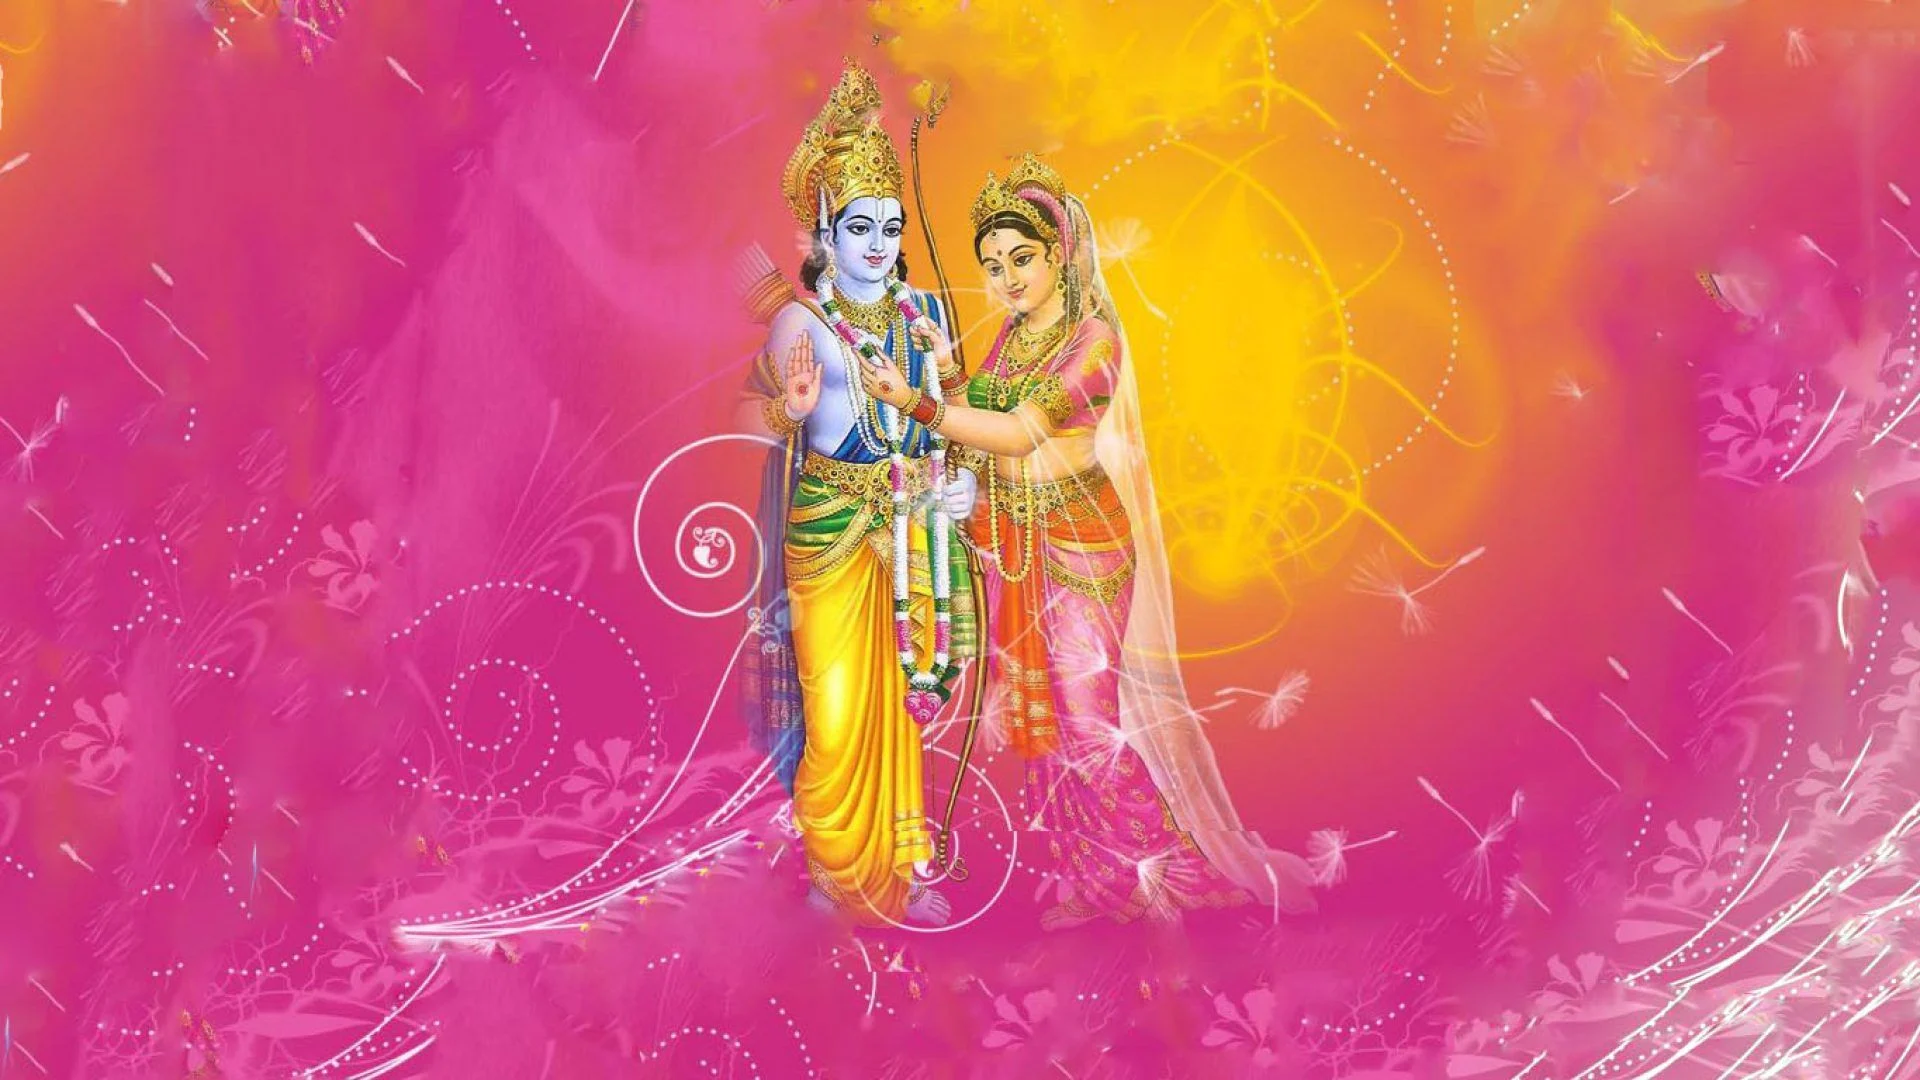 Ram sita image | STUDY VILLAGE